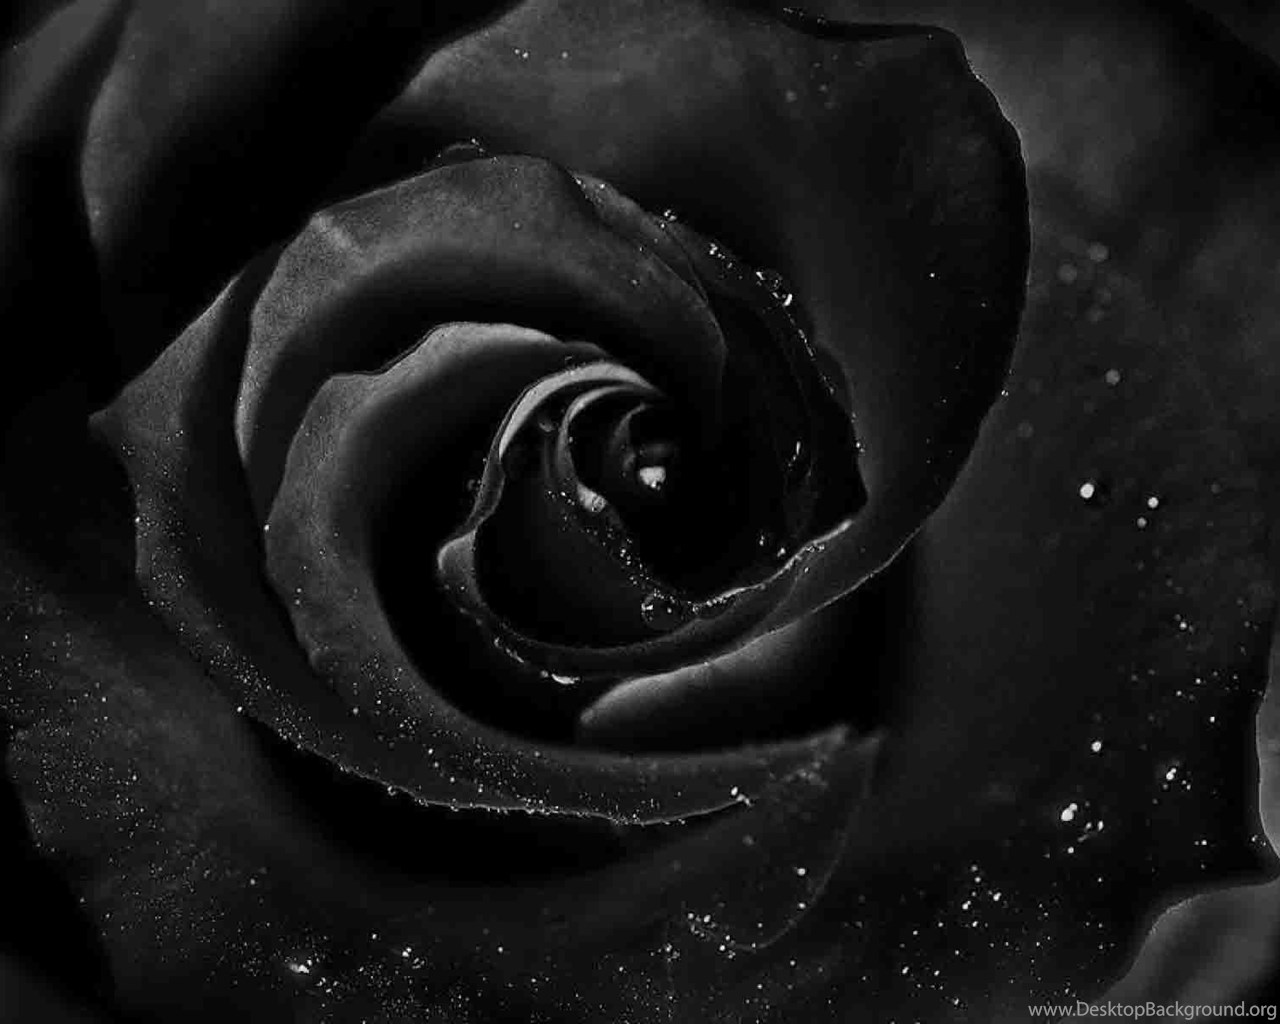  Black  Roses  HD  Wallpapers  Free Download Desktop Background